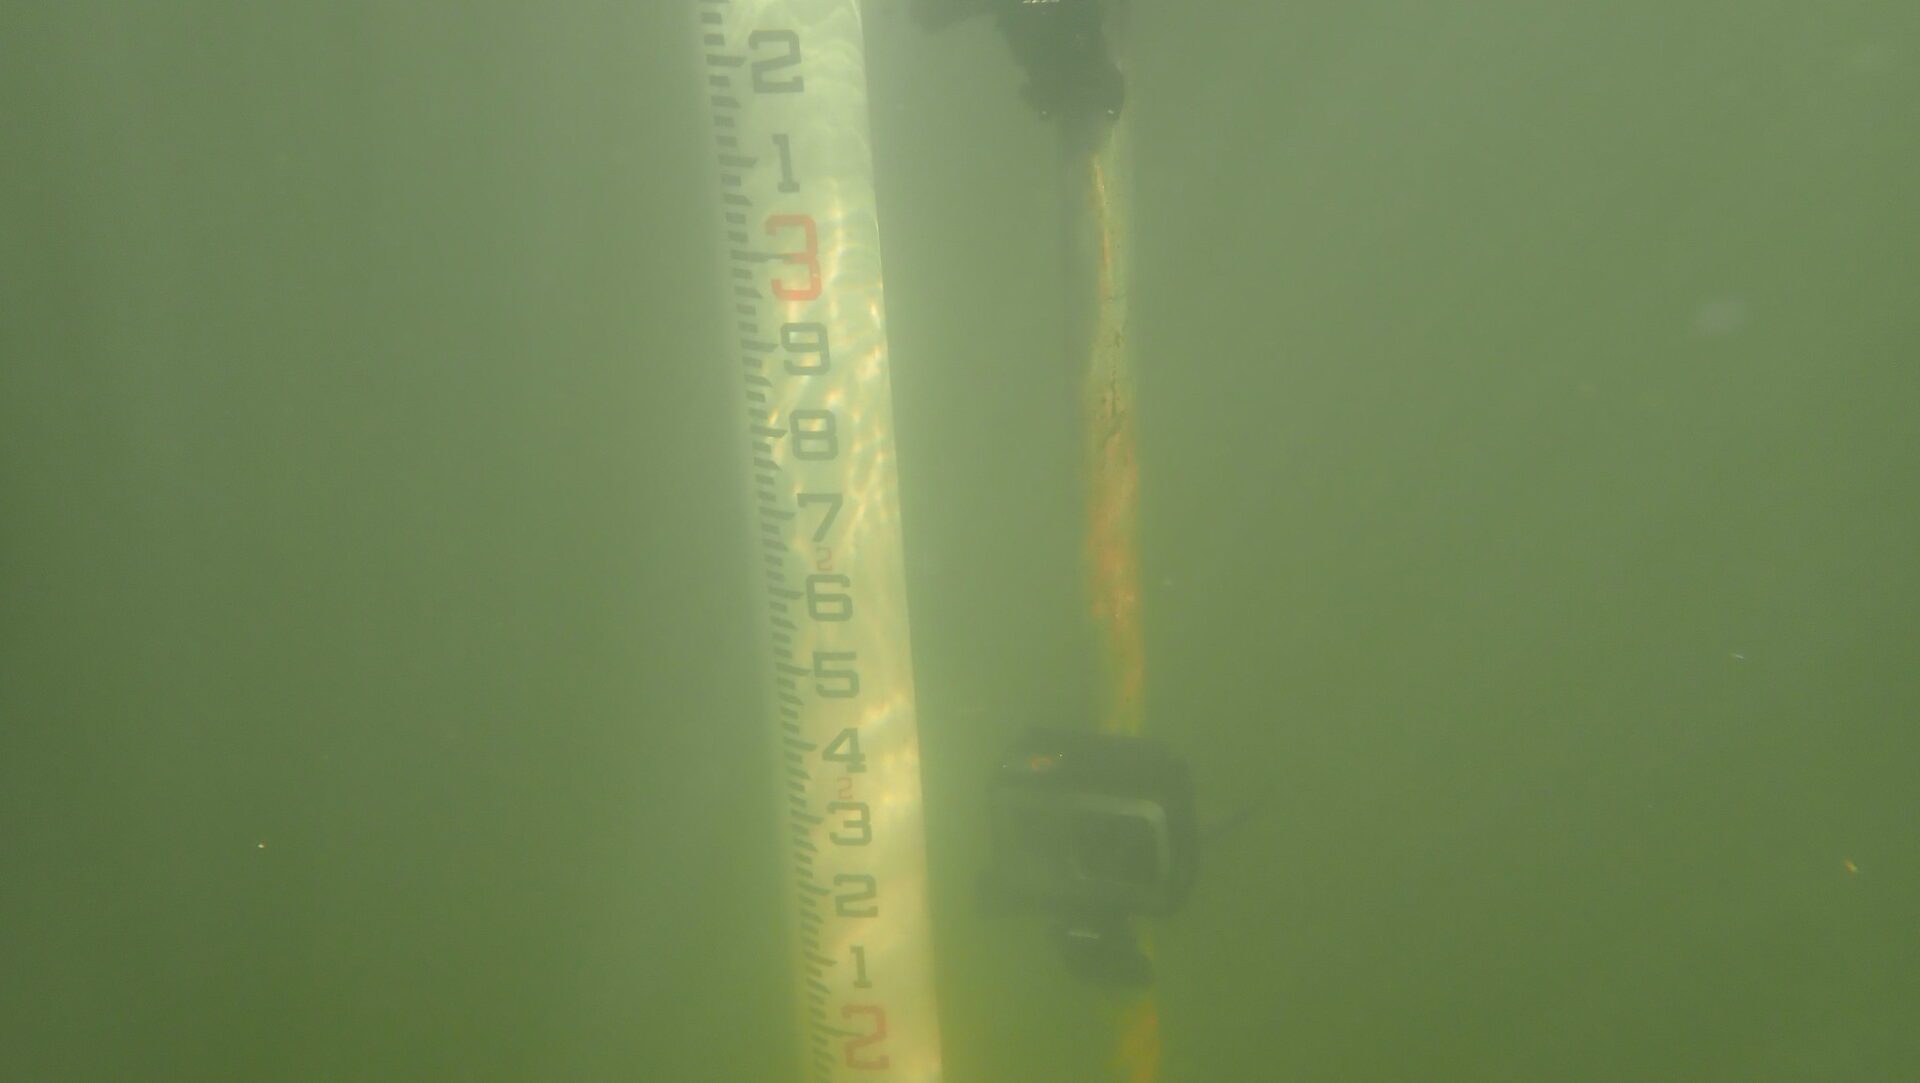 Depth measurement